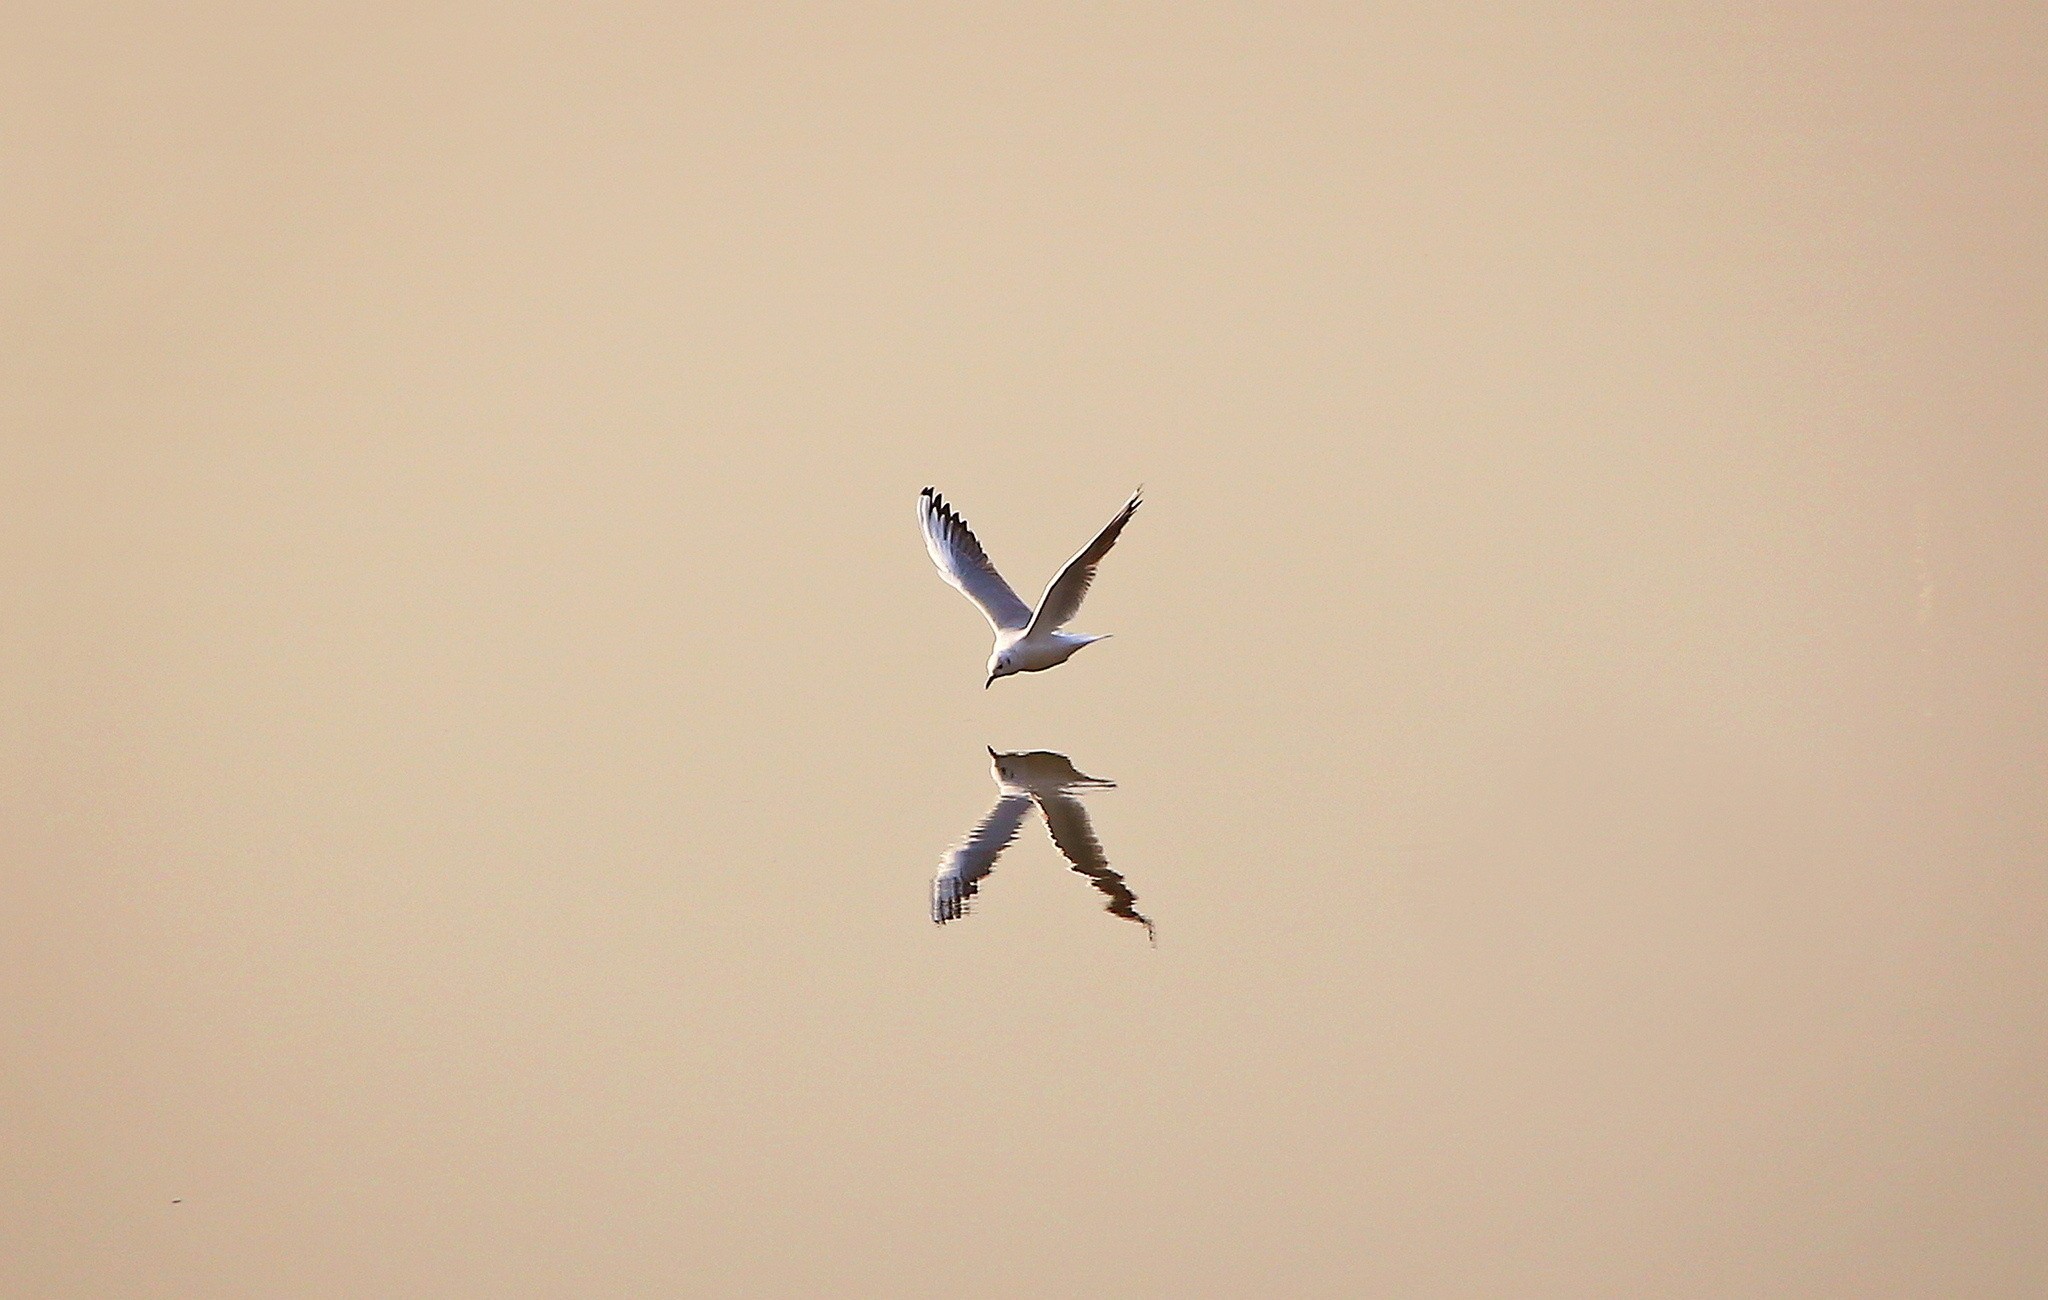 General 2048x1300 minimalism simple background animals birds seagulls reflection